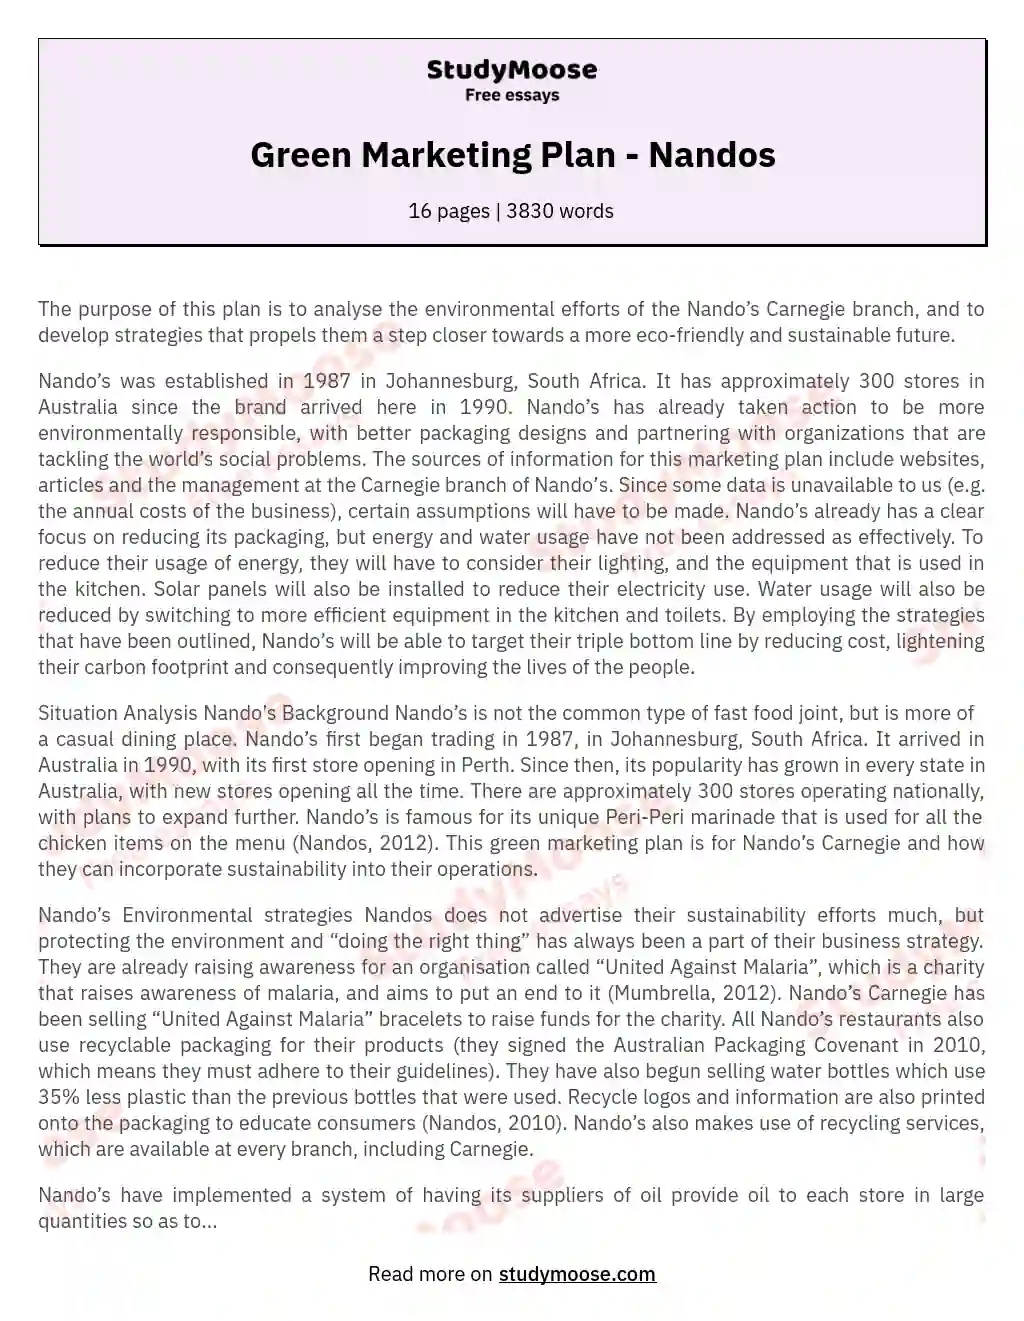 Green Marketing Plan - Nandos essay